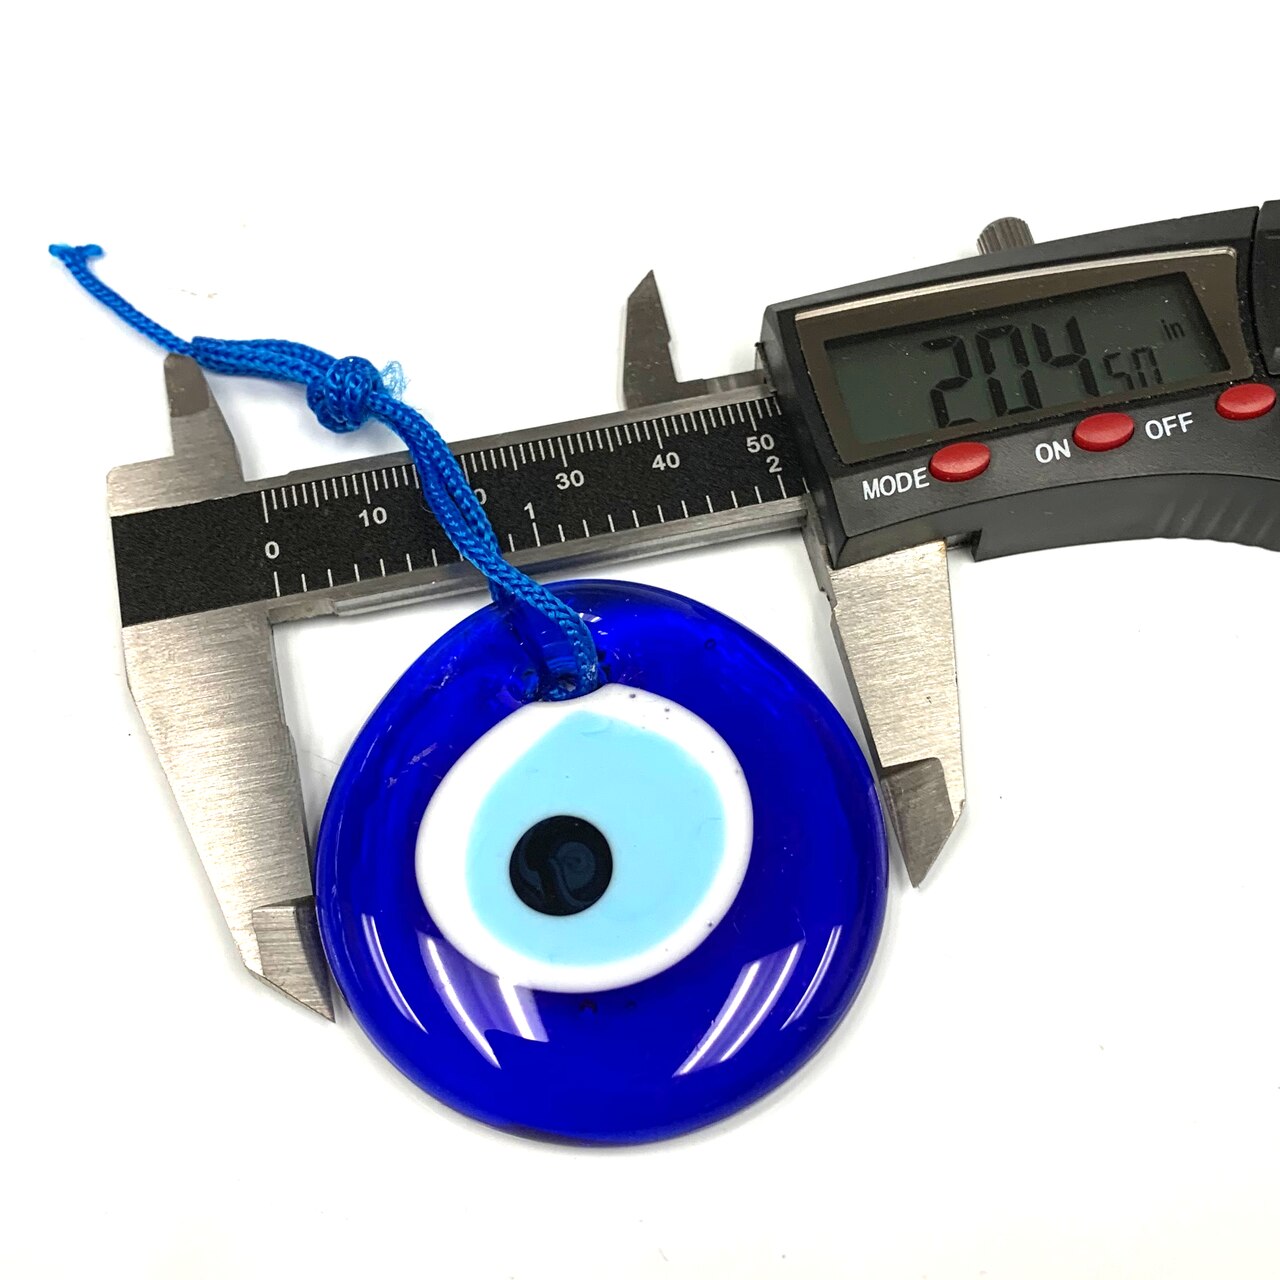 2" evil eye measurement